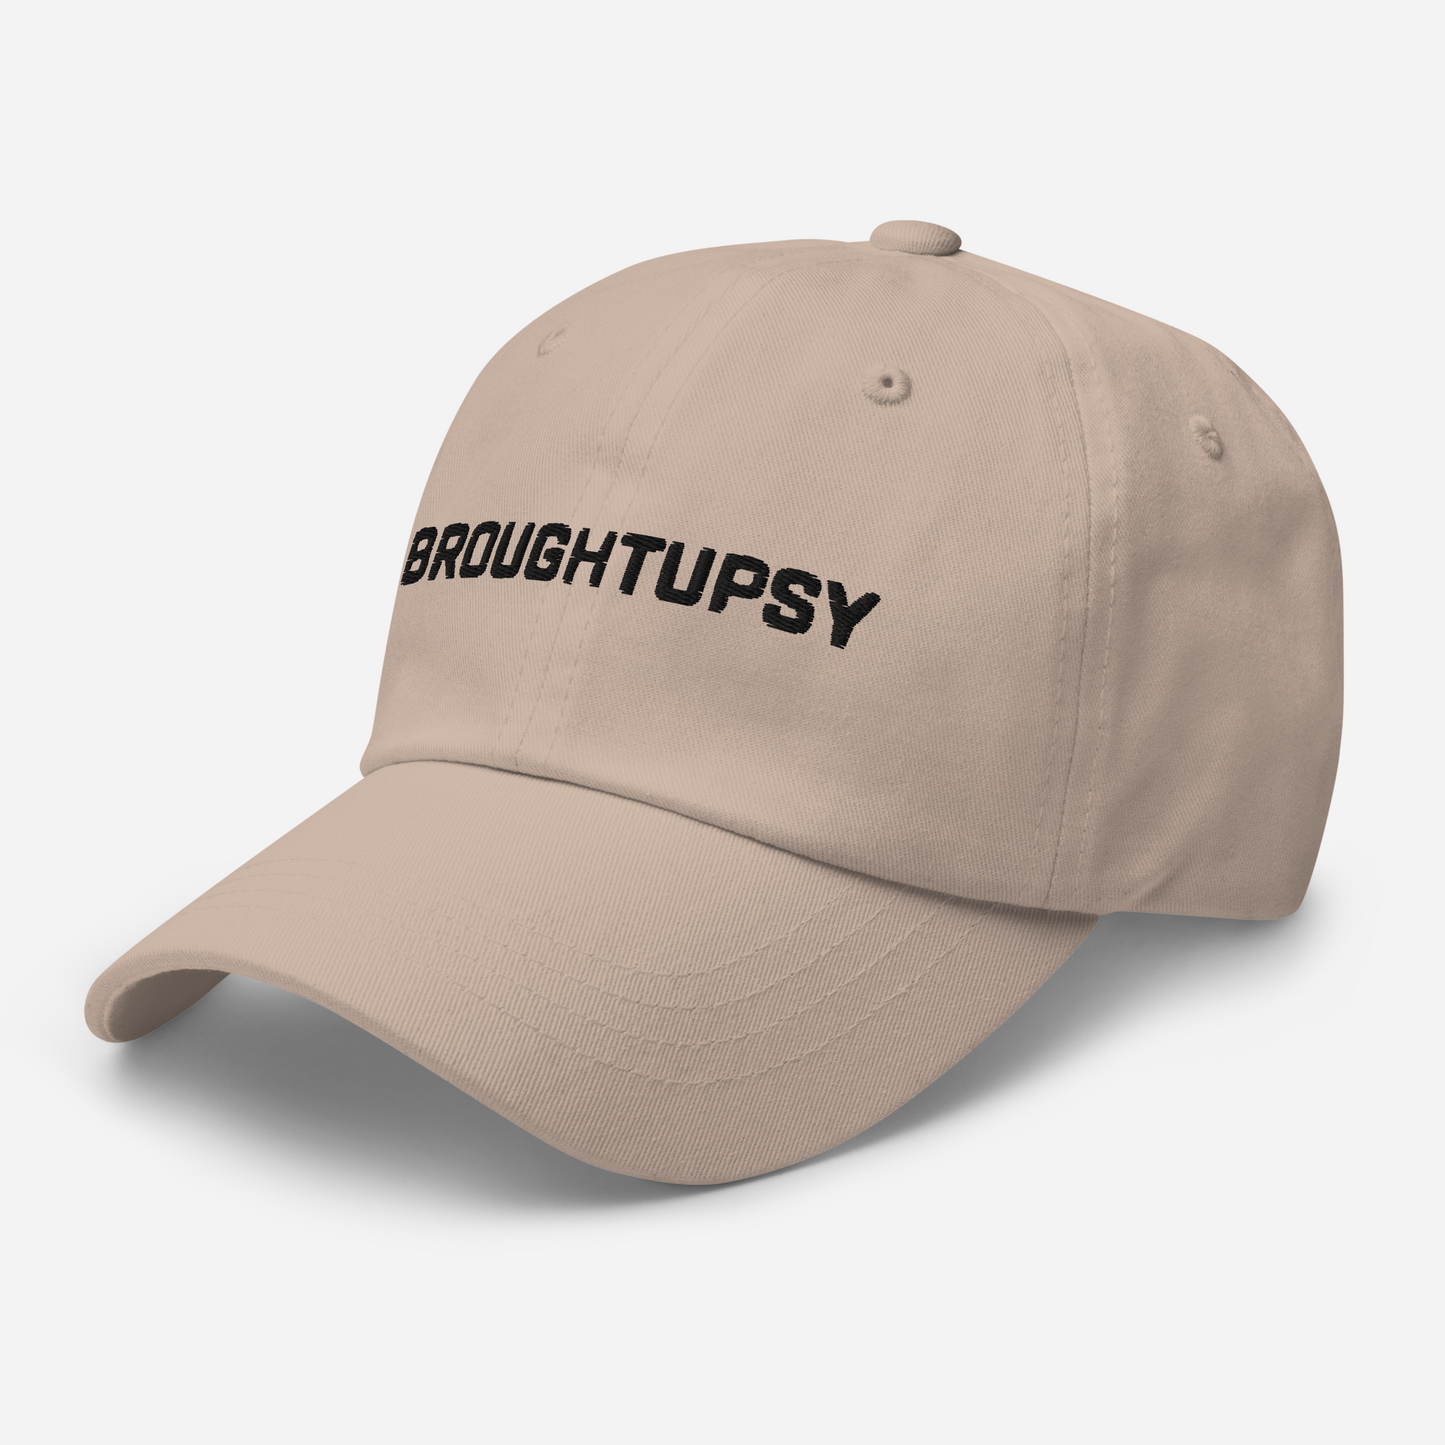 Broughtupsy Dad hat